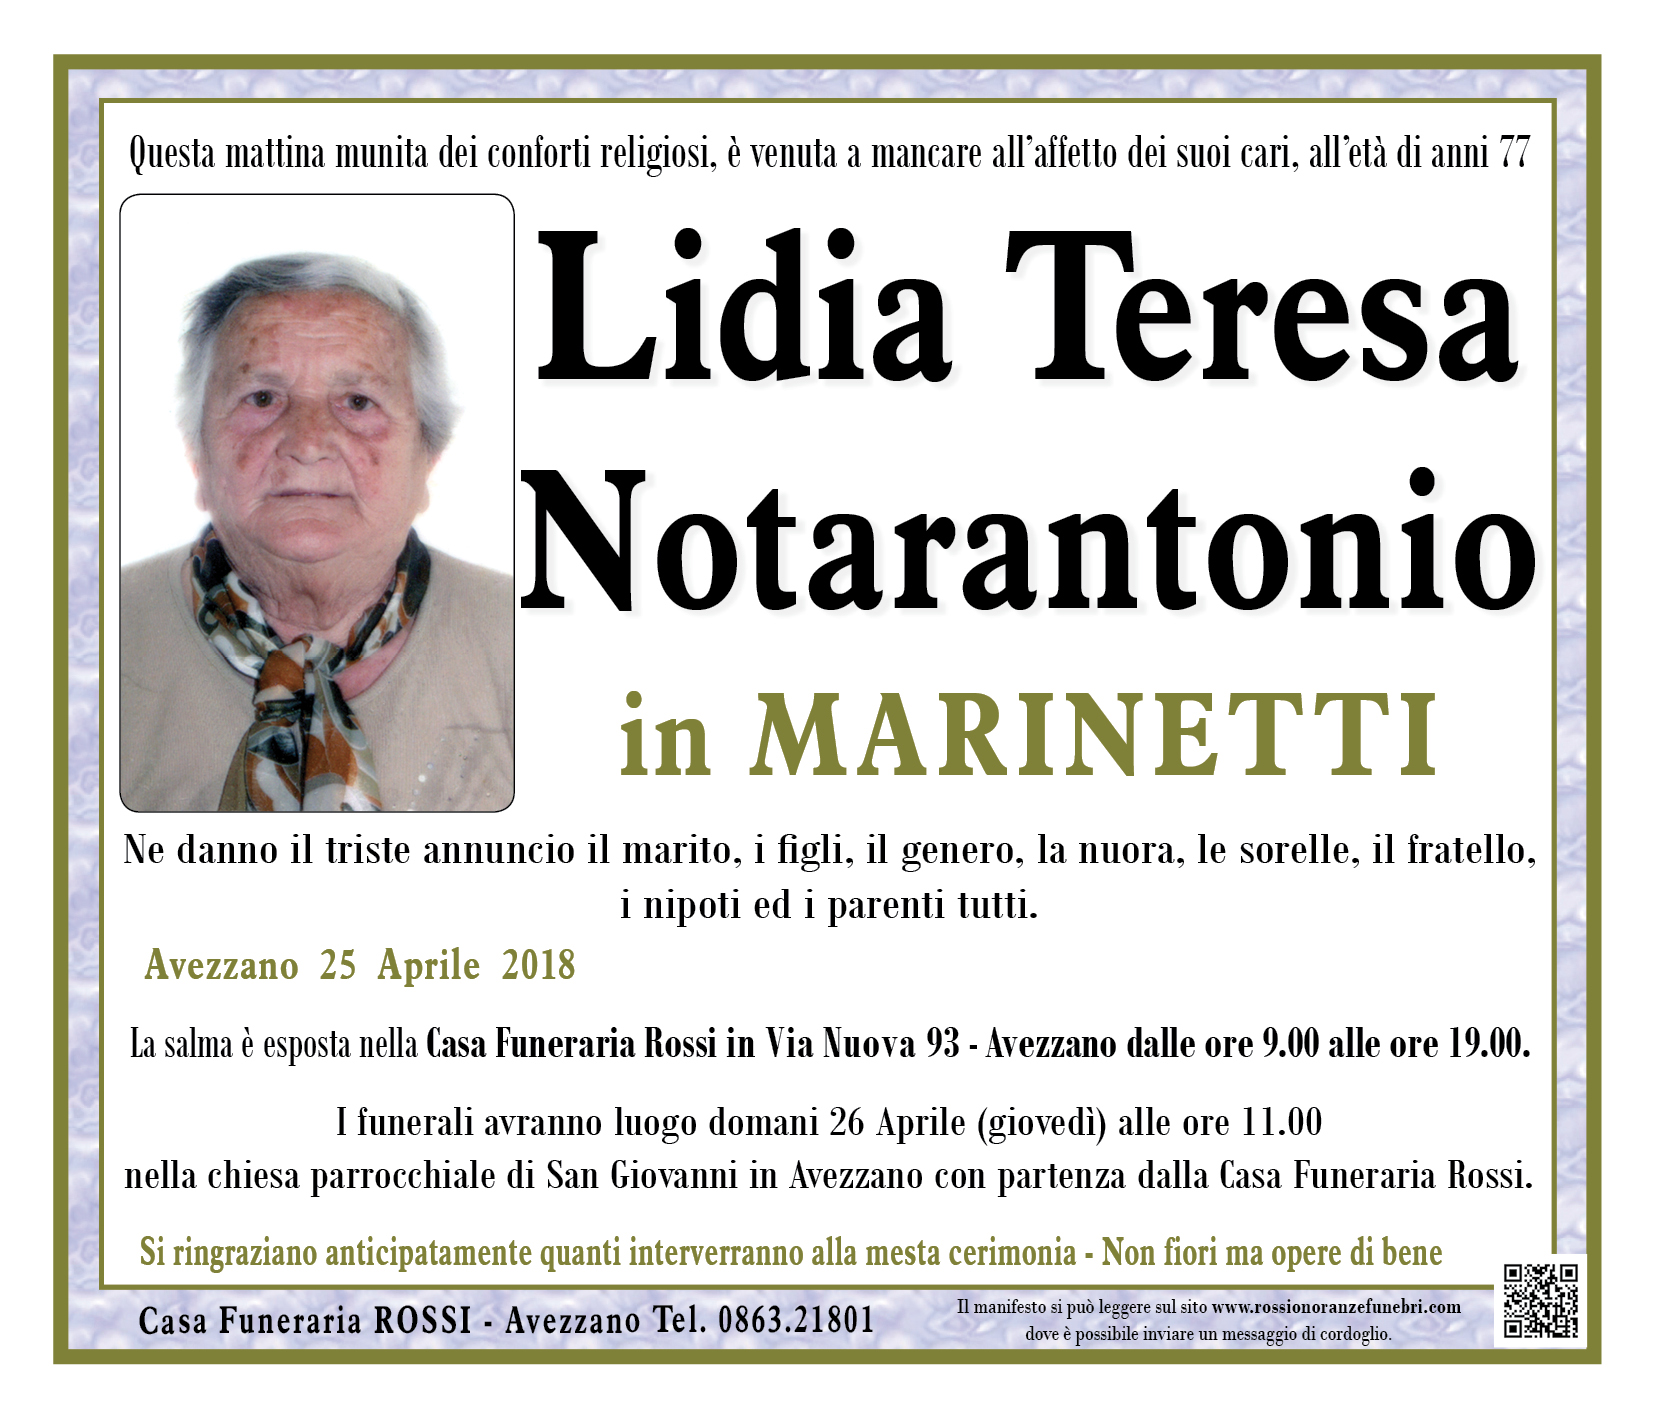 Lidia Teresa Notarantonio